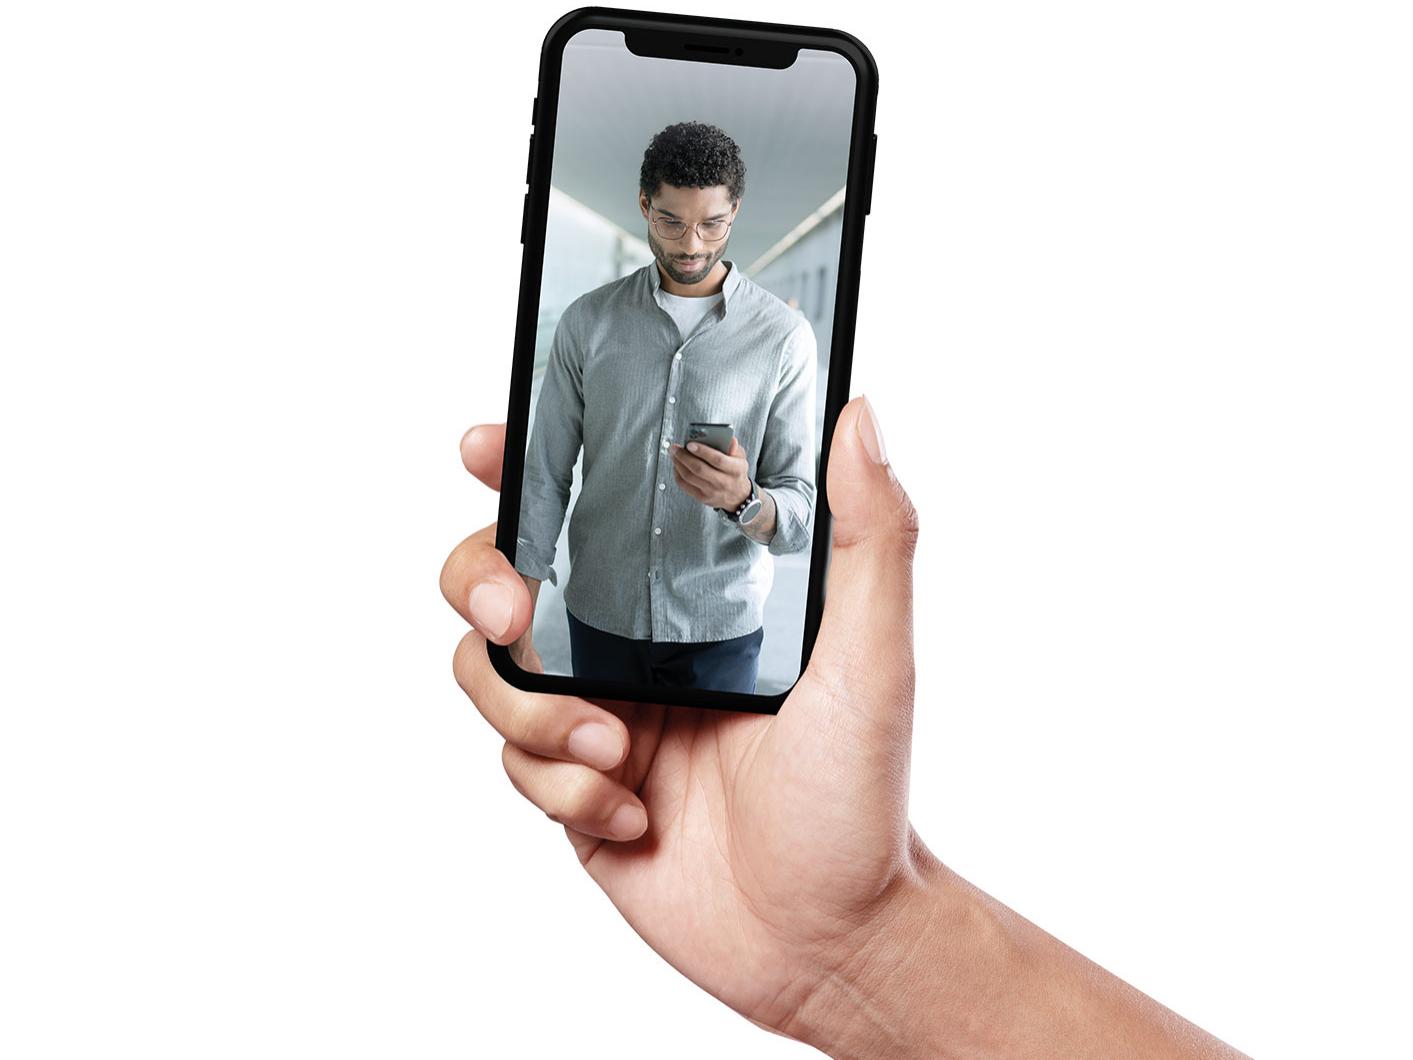 Smarttelefon som viser en ung mann med kort hår som går og har på seg ZEISS SmartLife-glass.